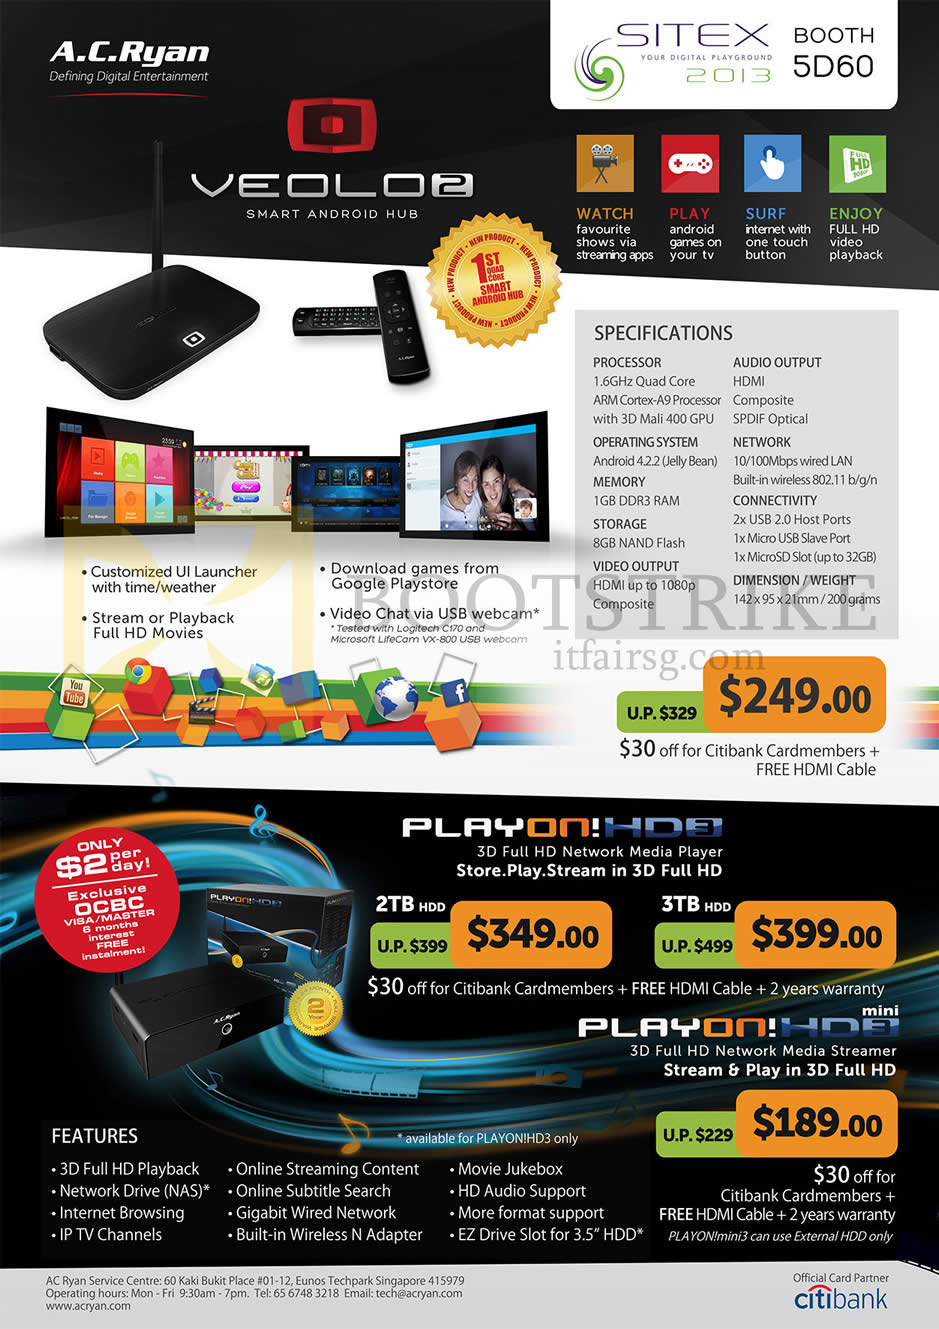 SITEX 2013 price list image brochure of AC Ryan Veolo2 Android Hub, Citibank, PlayOn HD3 Media Player, PlayOn HD3 Mini Media Streamer